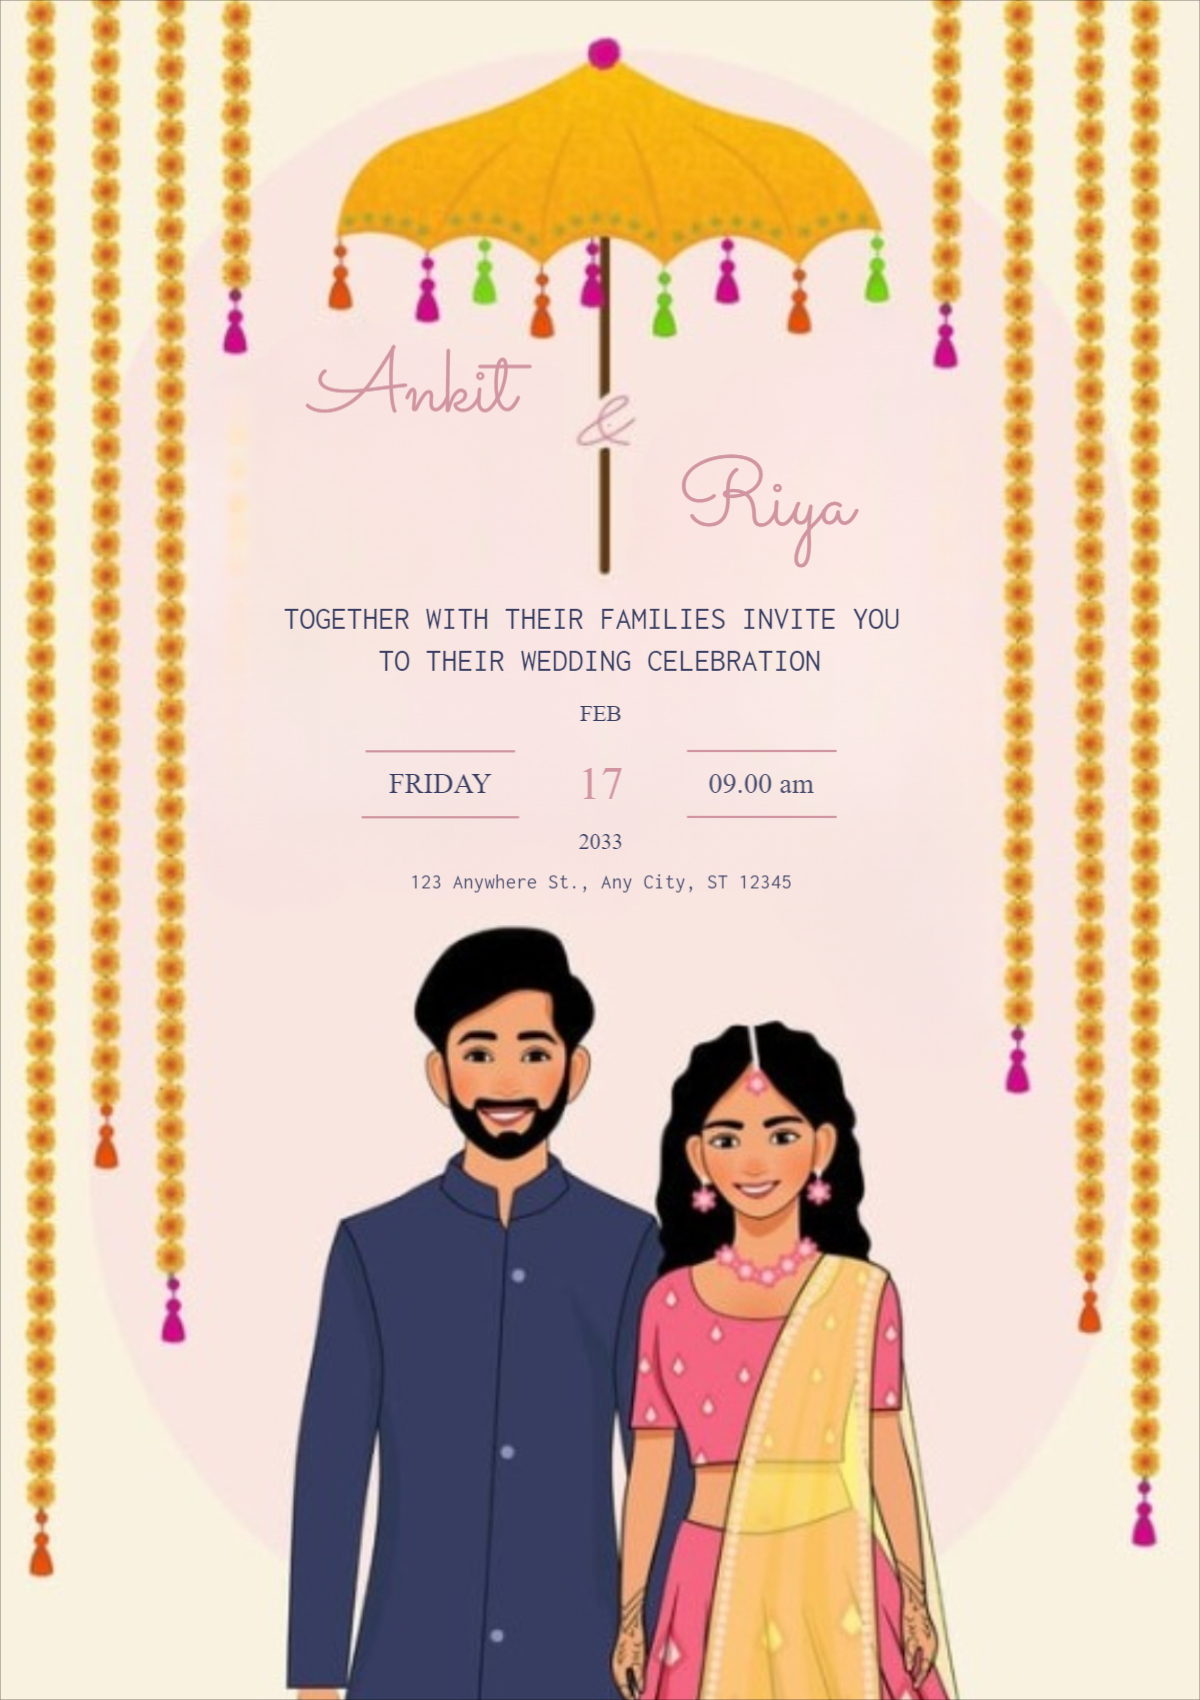 Wedding invitation card design download for free